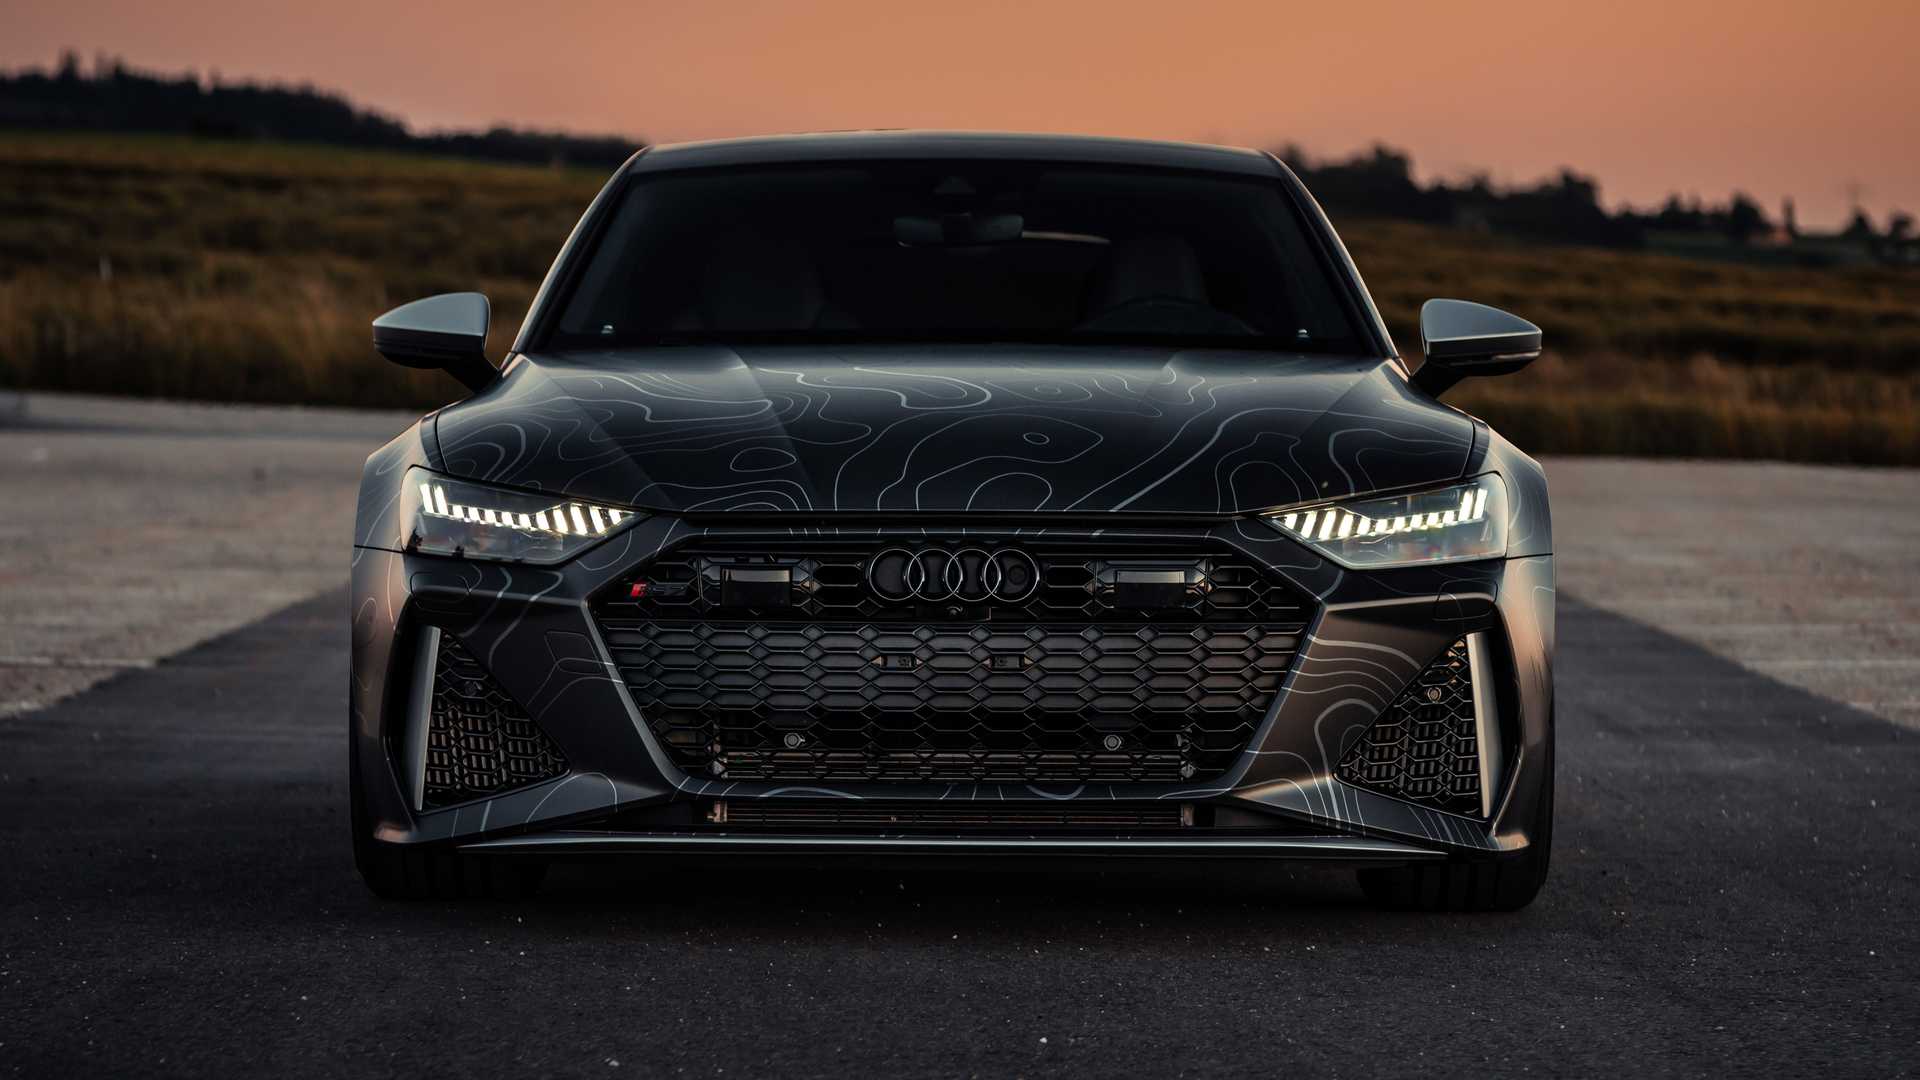 Audi RS7 By Black Box Richter. Motor1.com Photo